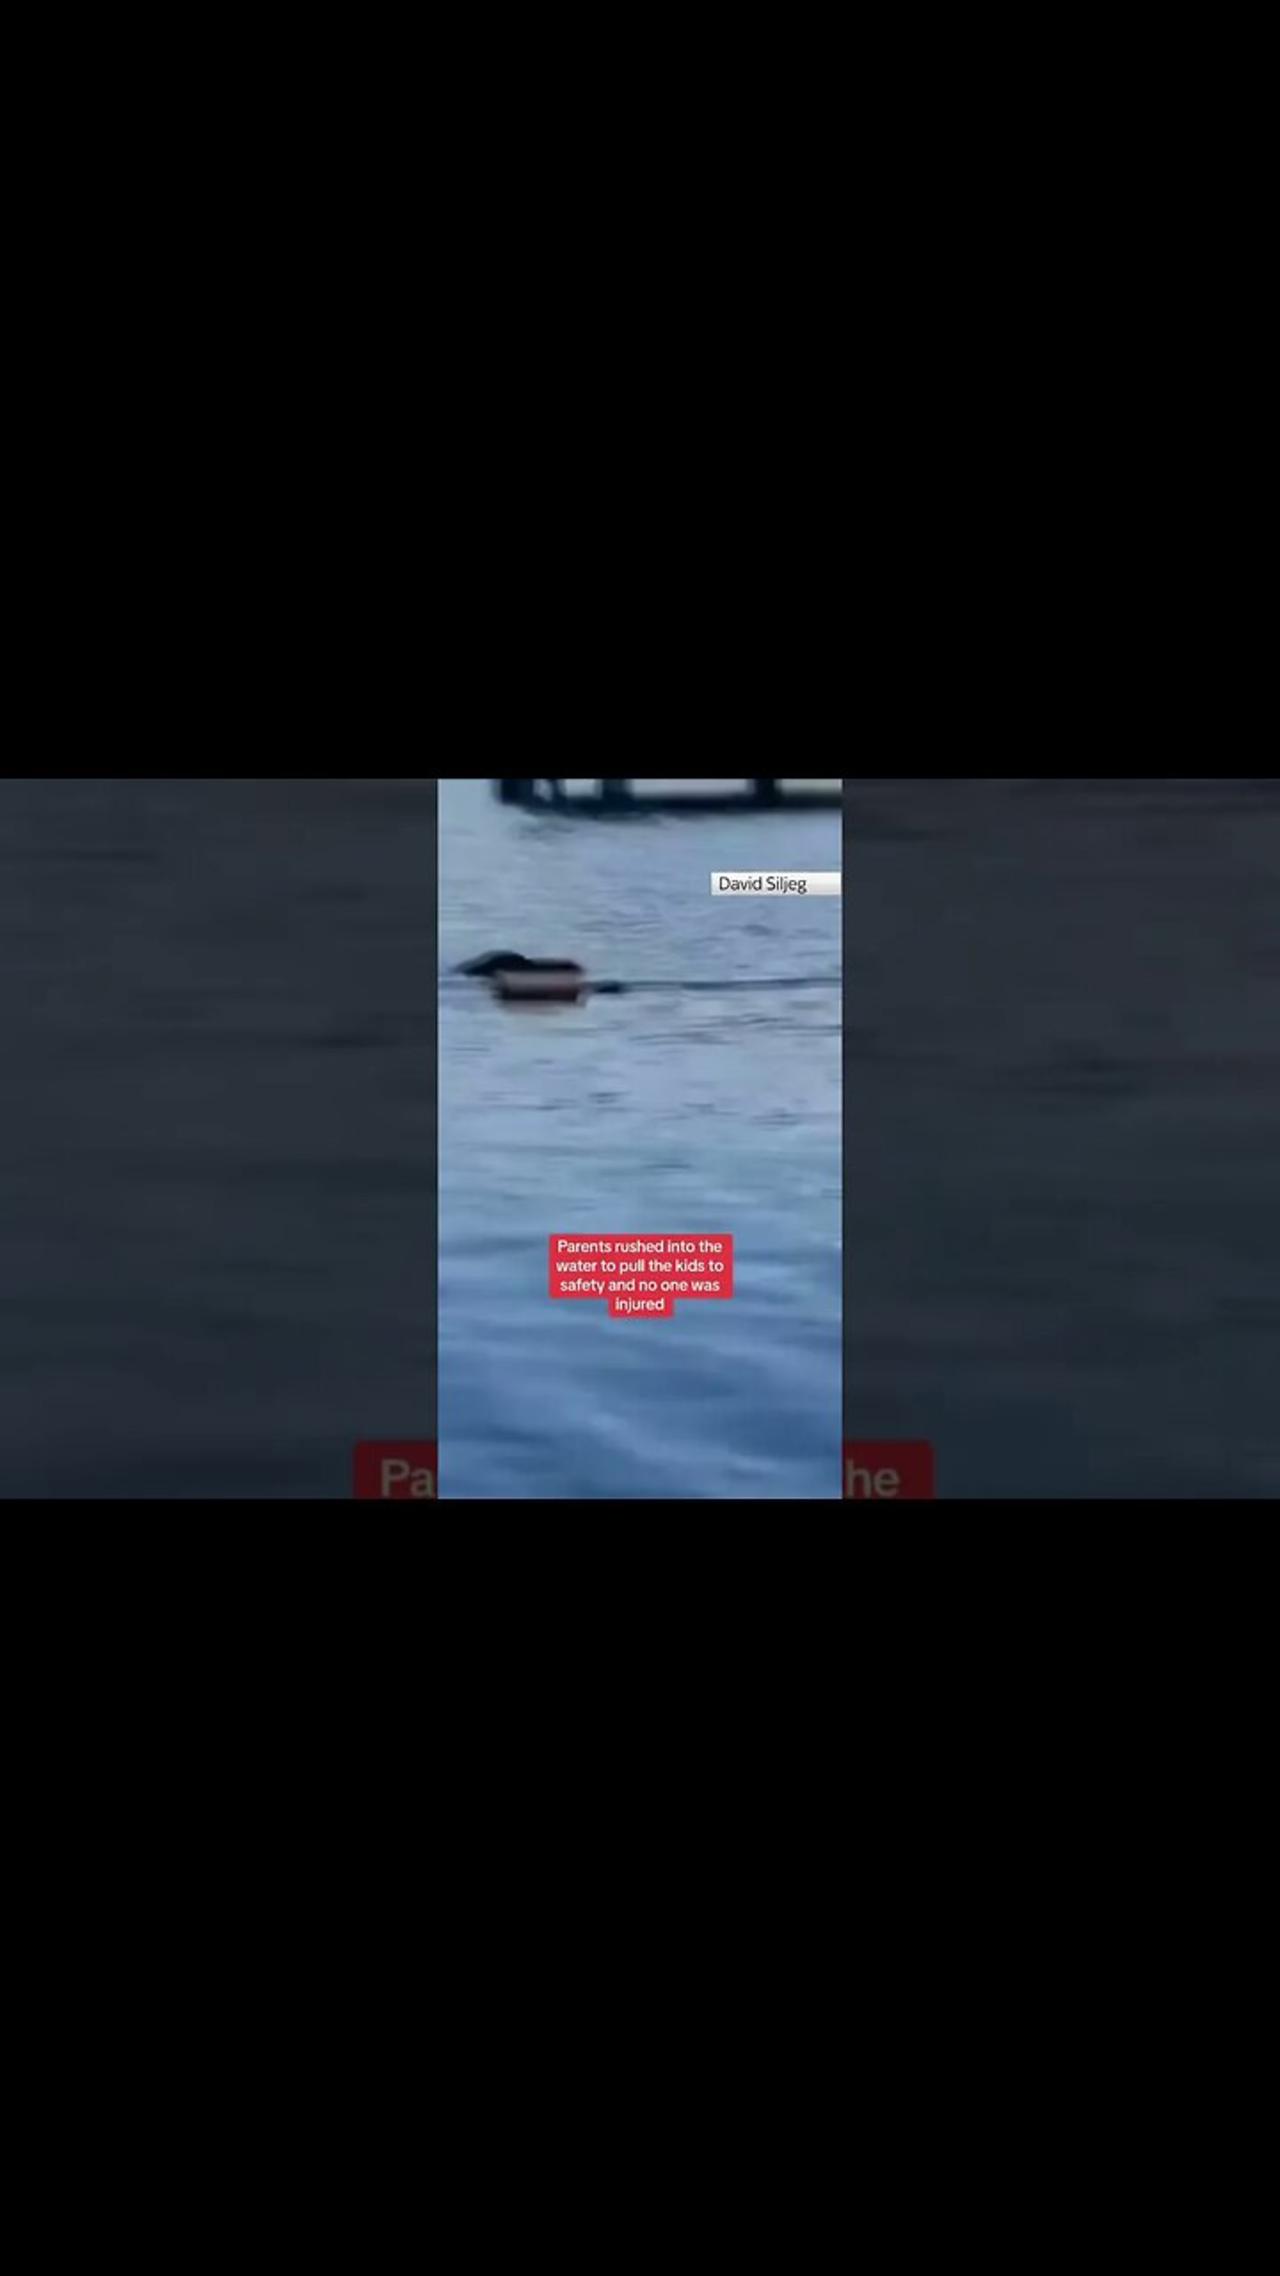 Texas: Massive alligator captured swimming towards group of children